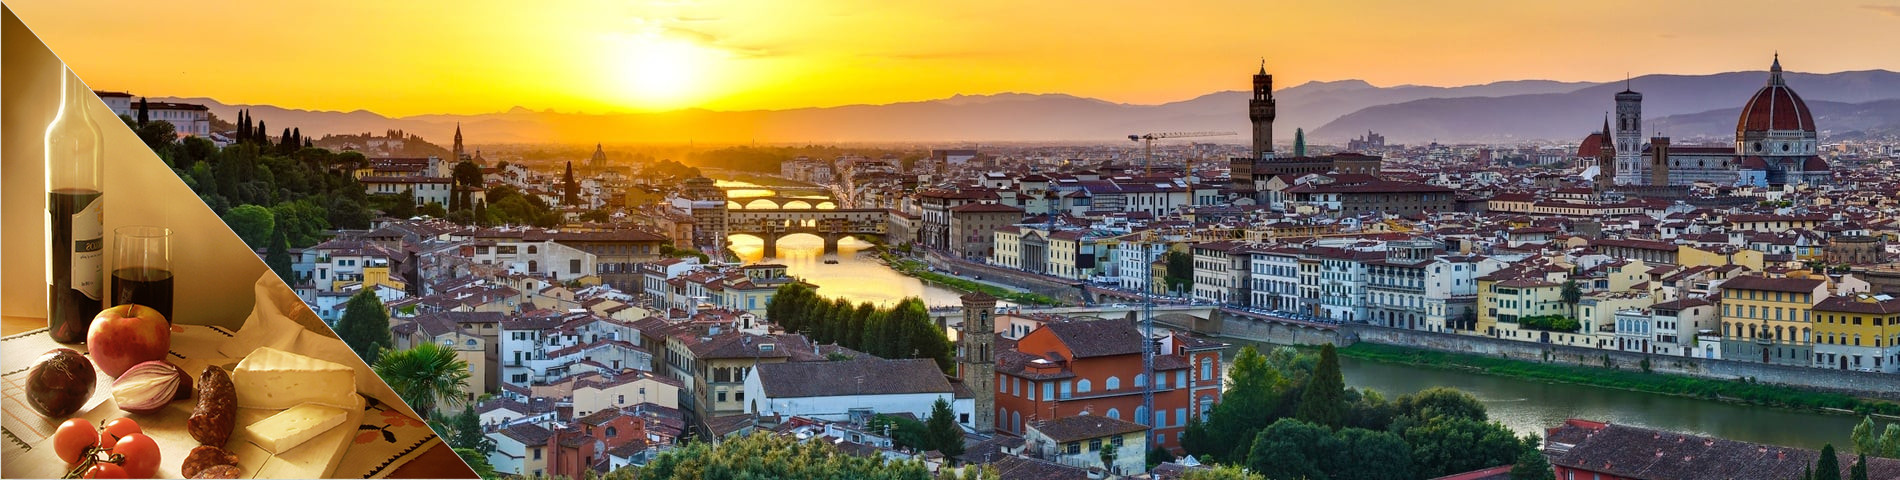 Florence - Italien & Culture